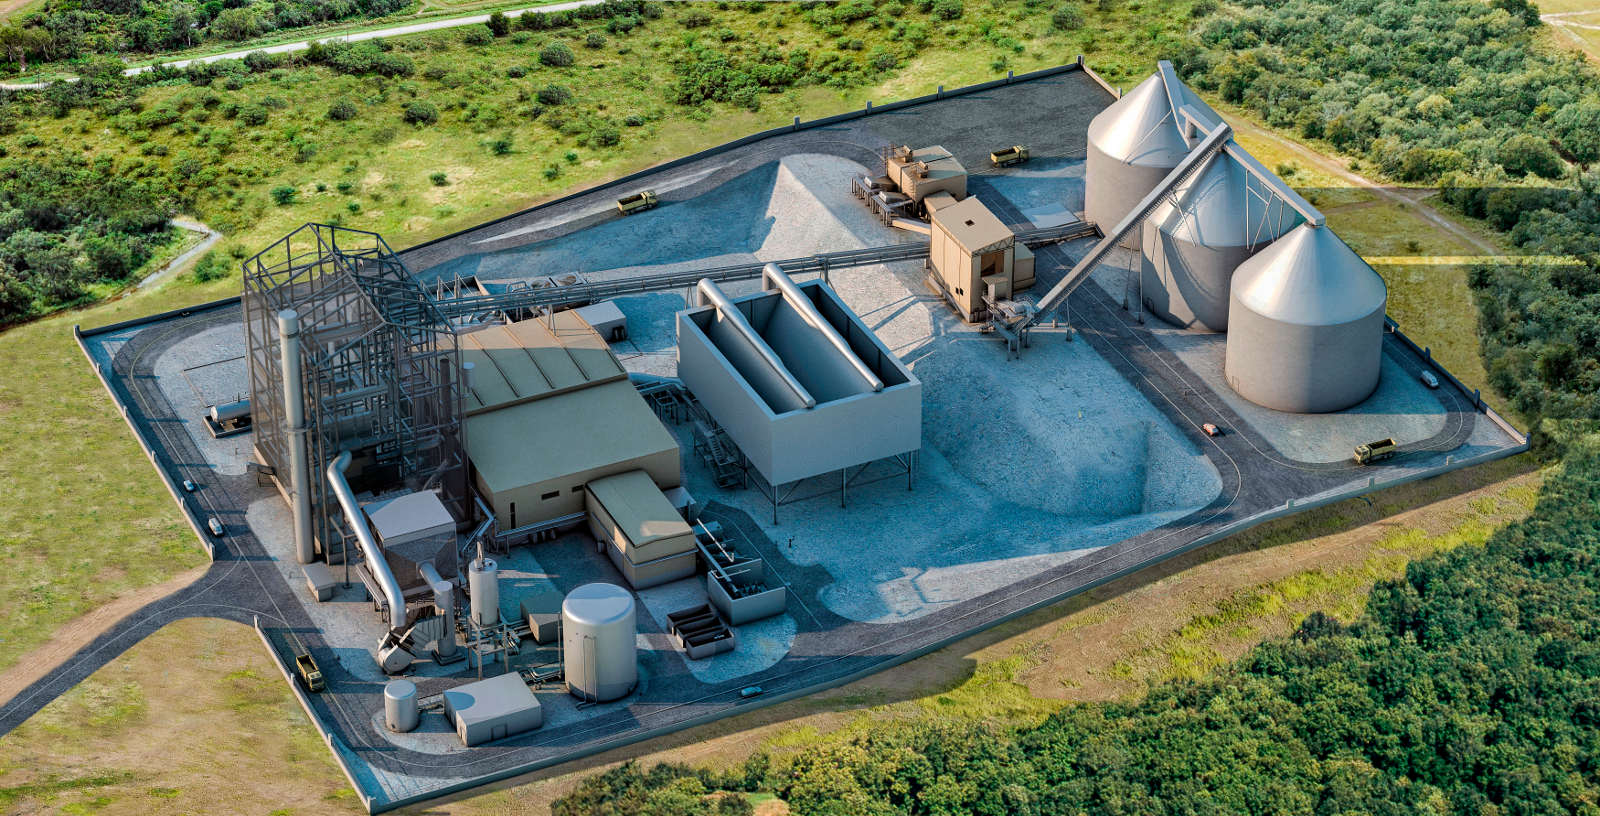 biomass energy plant